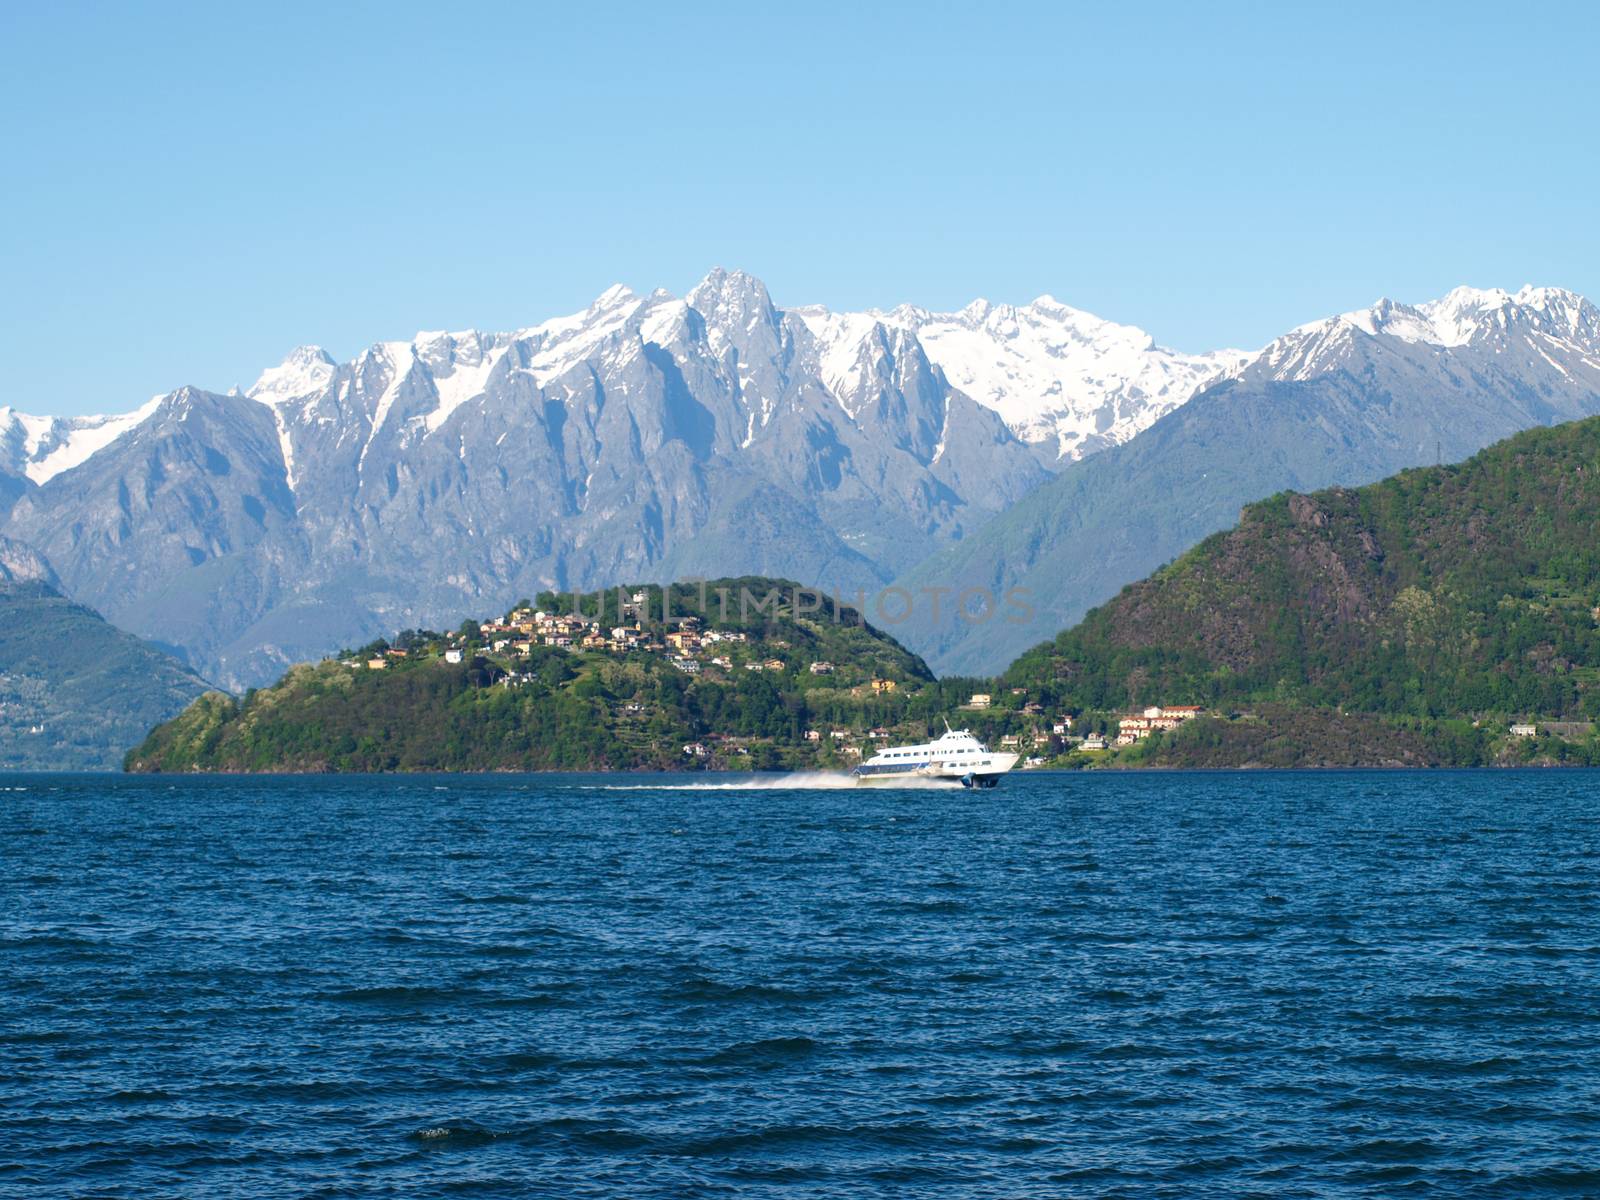 Pianello del Lario, Lake of Como, Italy: Panorama of the Hydrofoil and the background Piona on the Lake of Como